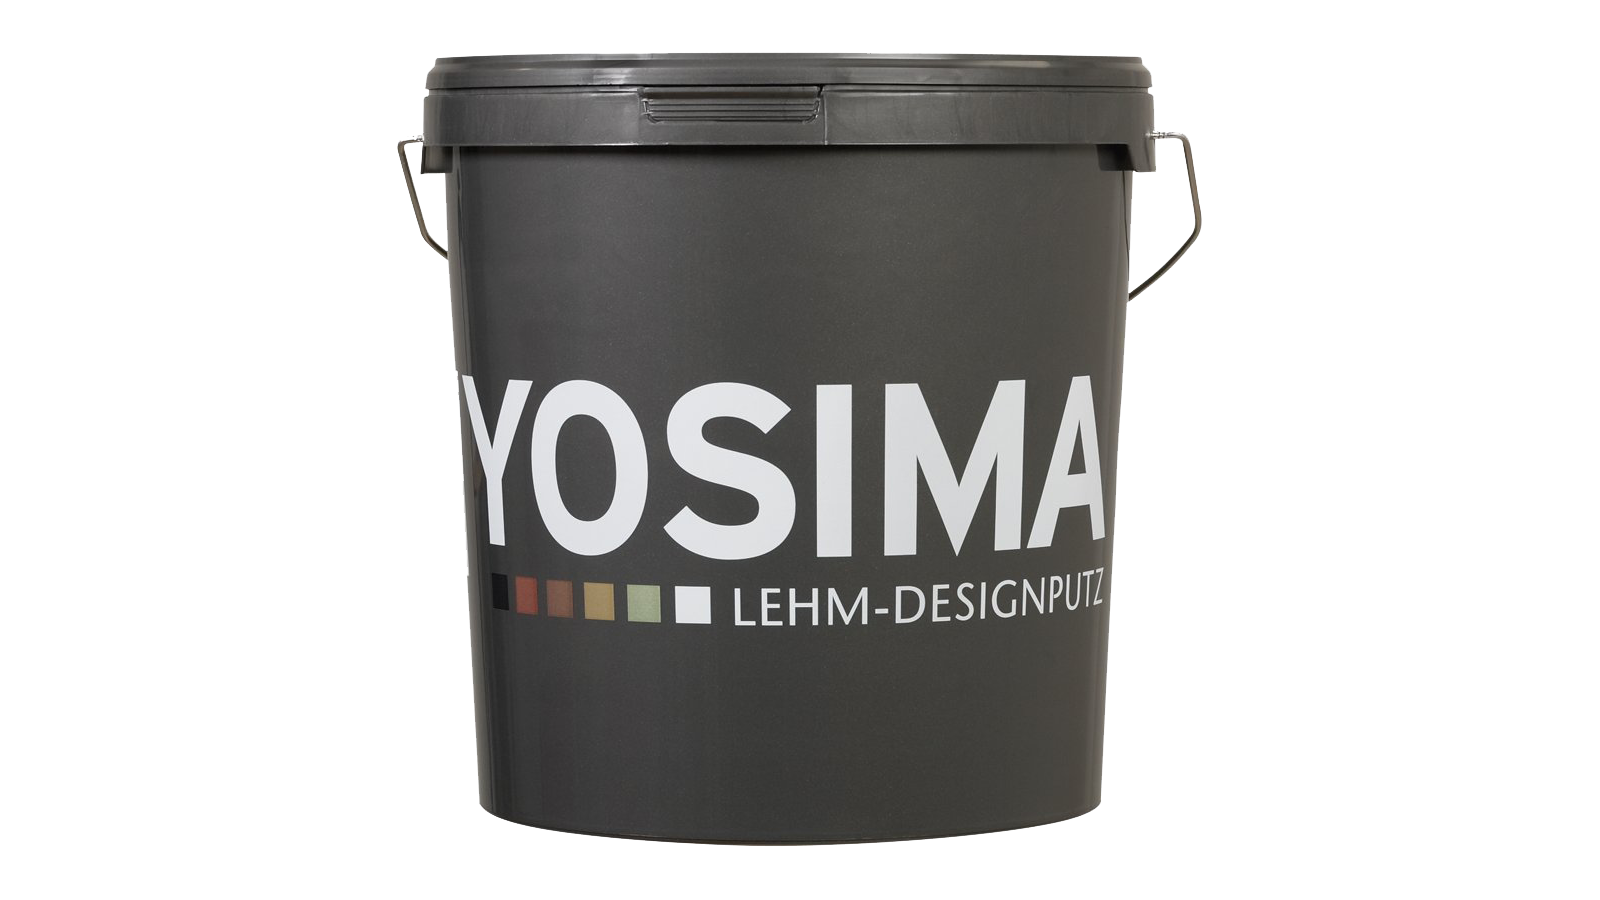 YOSIMA Lehm-Designputz Farbraum Sierra-Braun